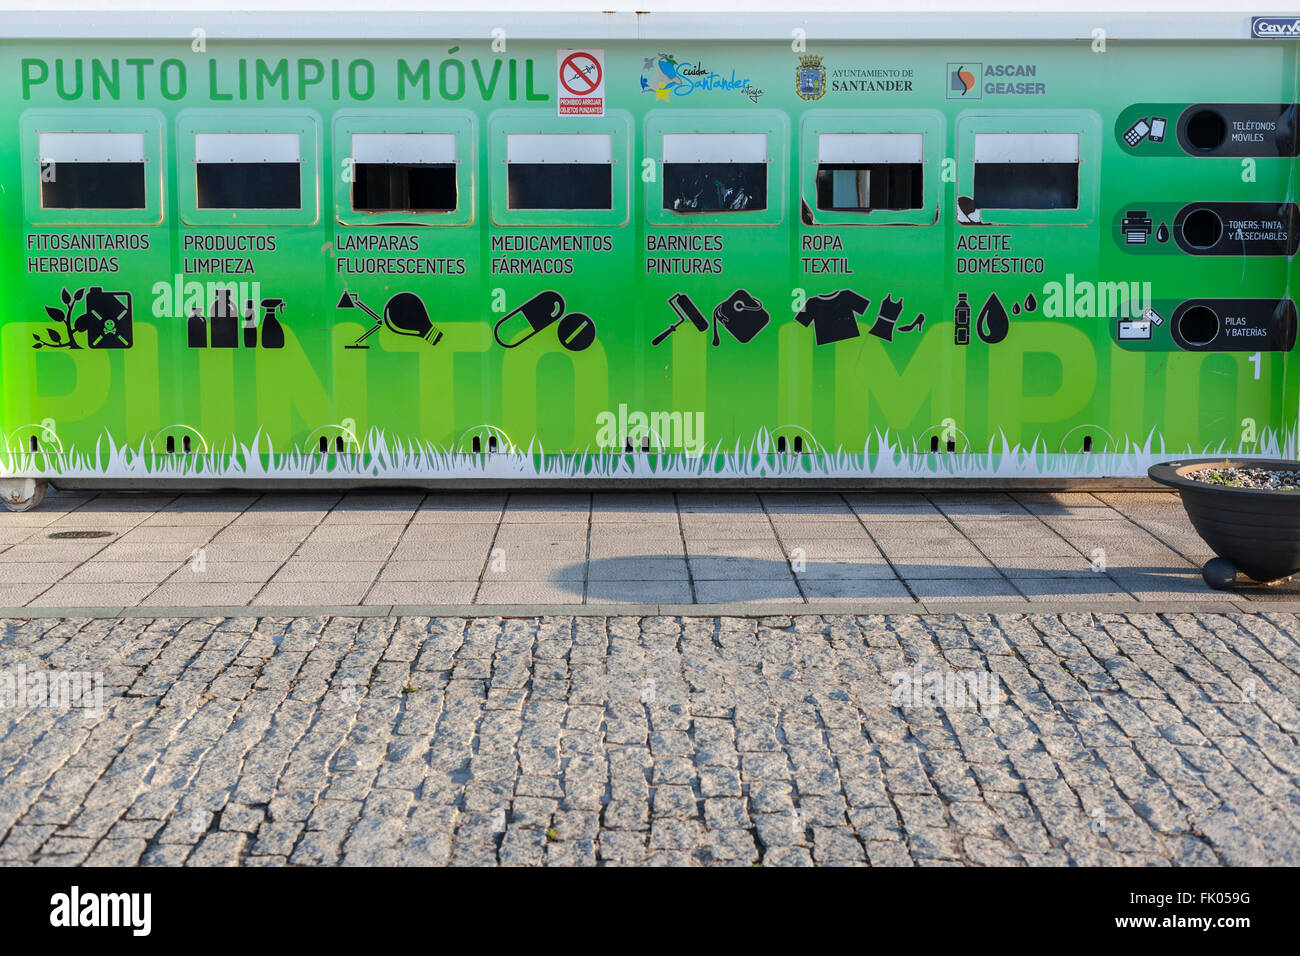 Punto limpio movil, recycling. Santander, Cantabria, Spain. Stock Photo